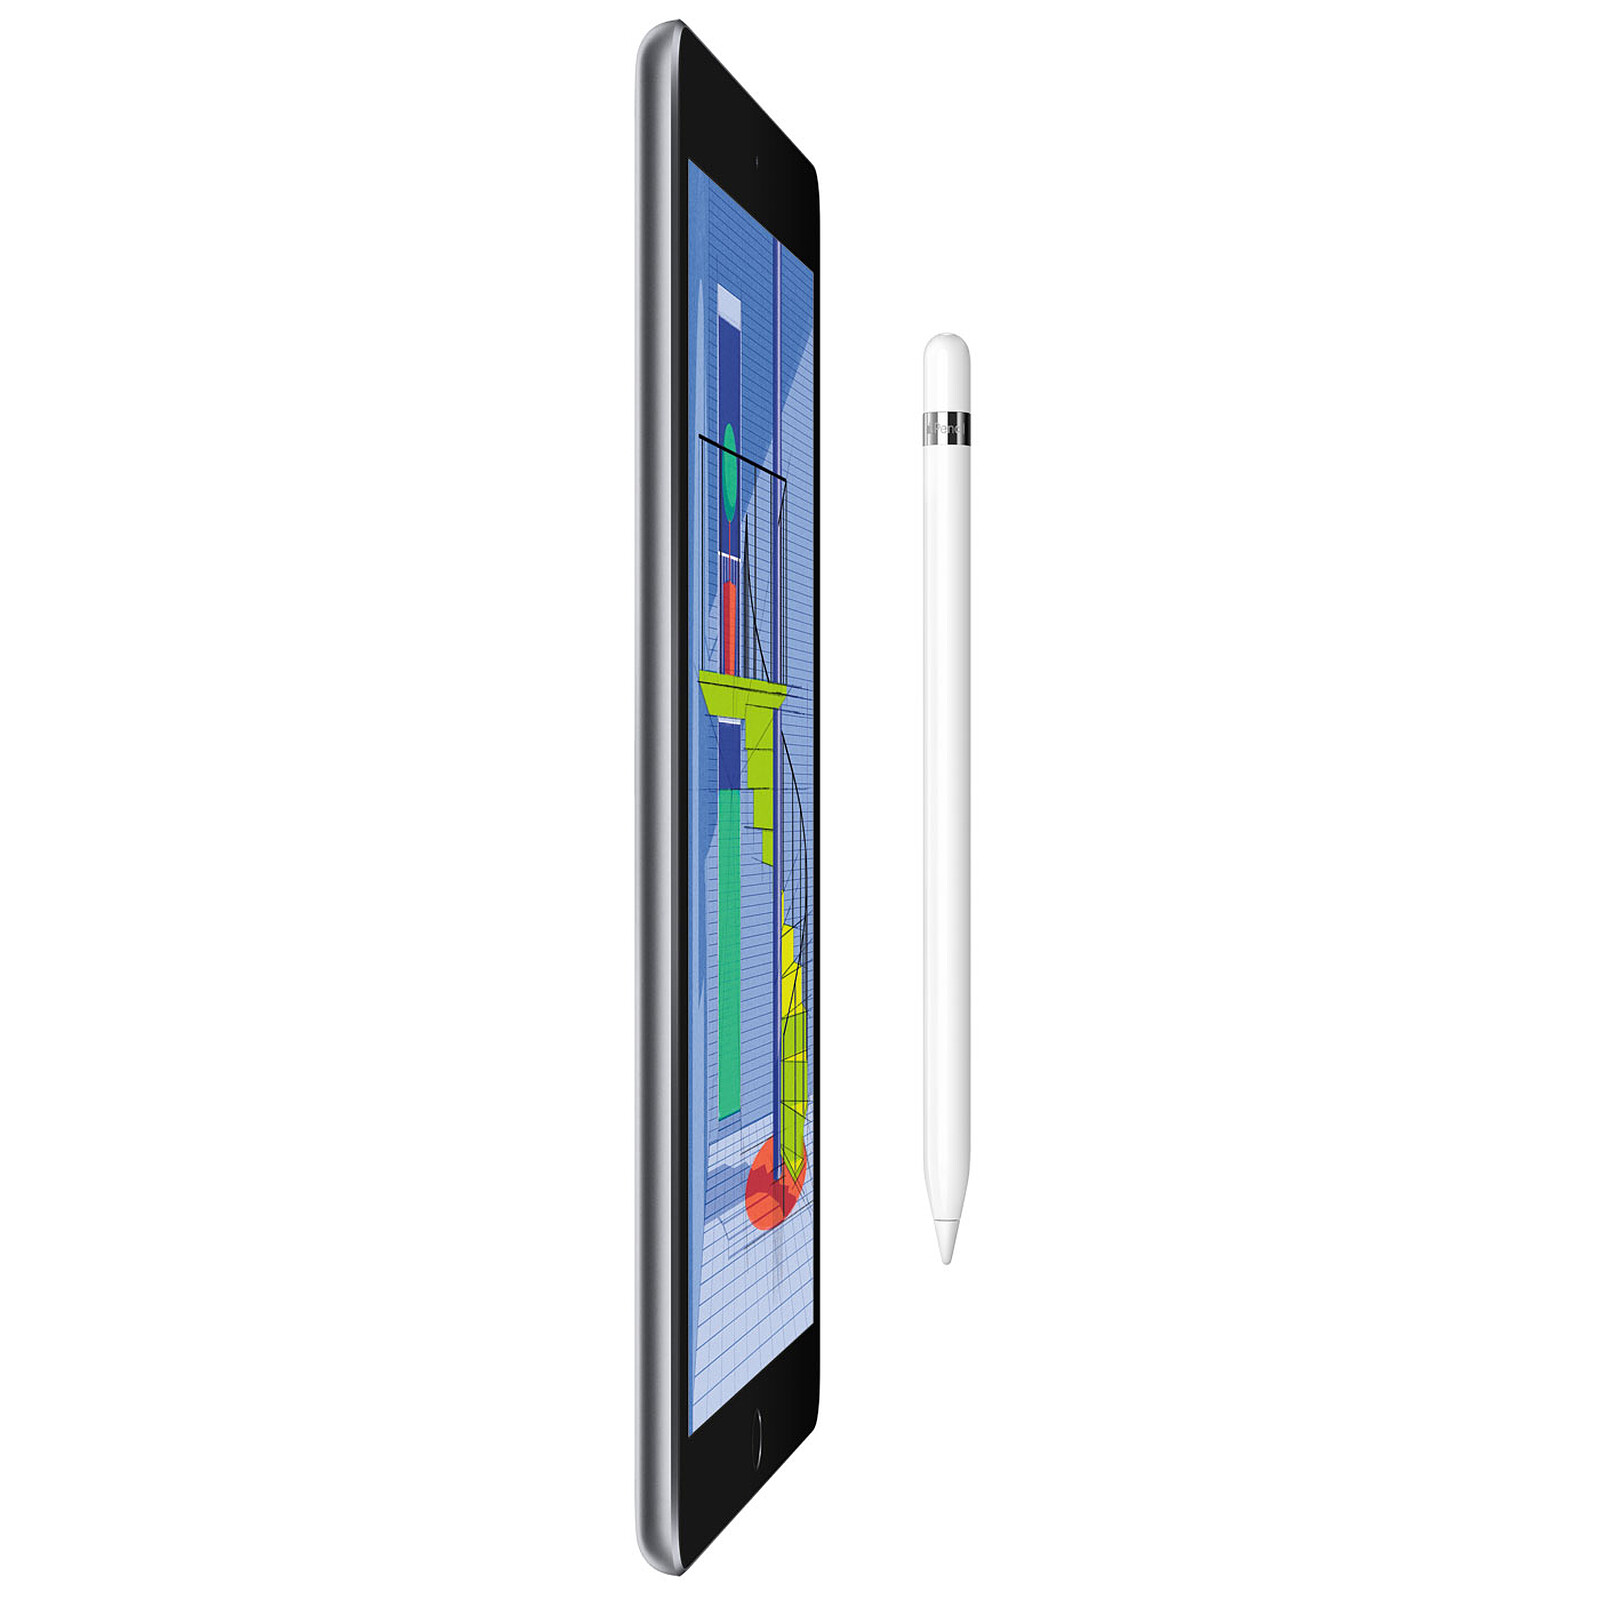 Apple iPad (2018) Wi-Fi 128 GB Wi-Fi Sideral Gris - Tablet Apple 